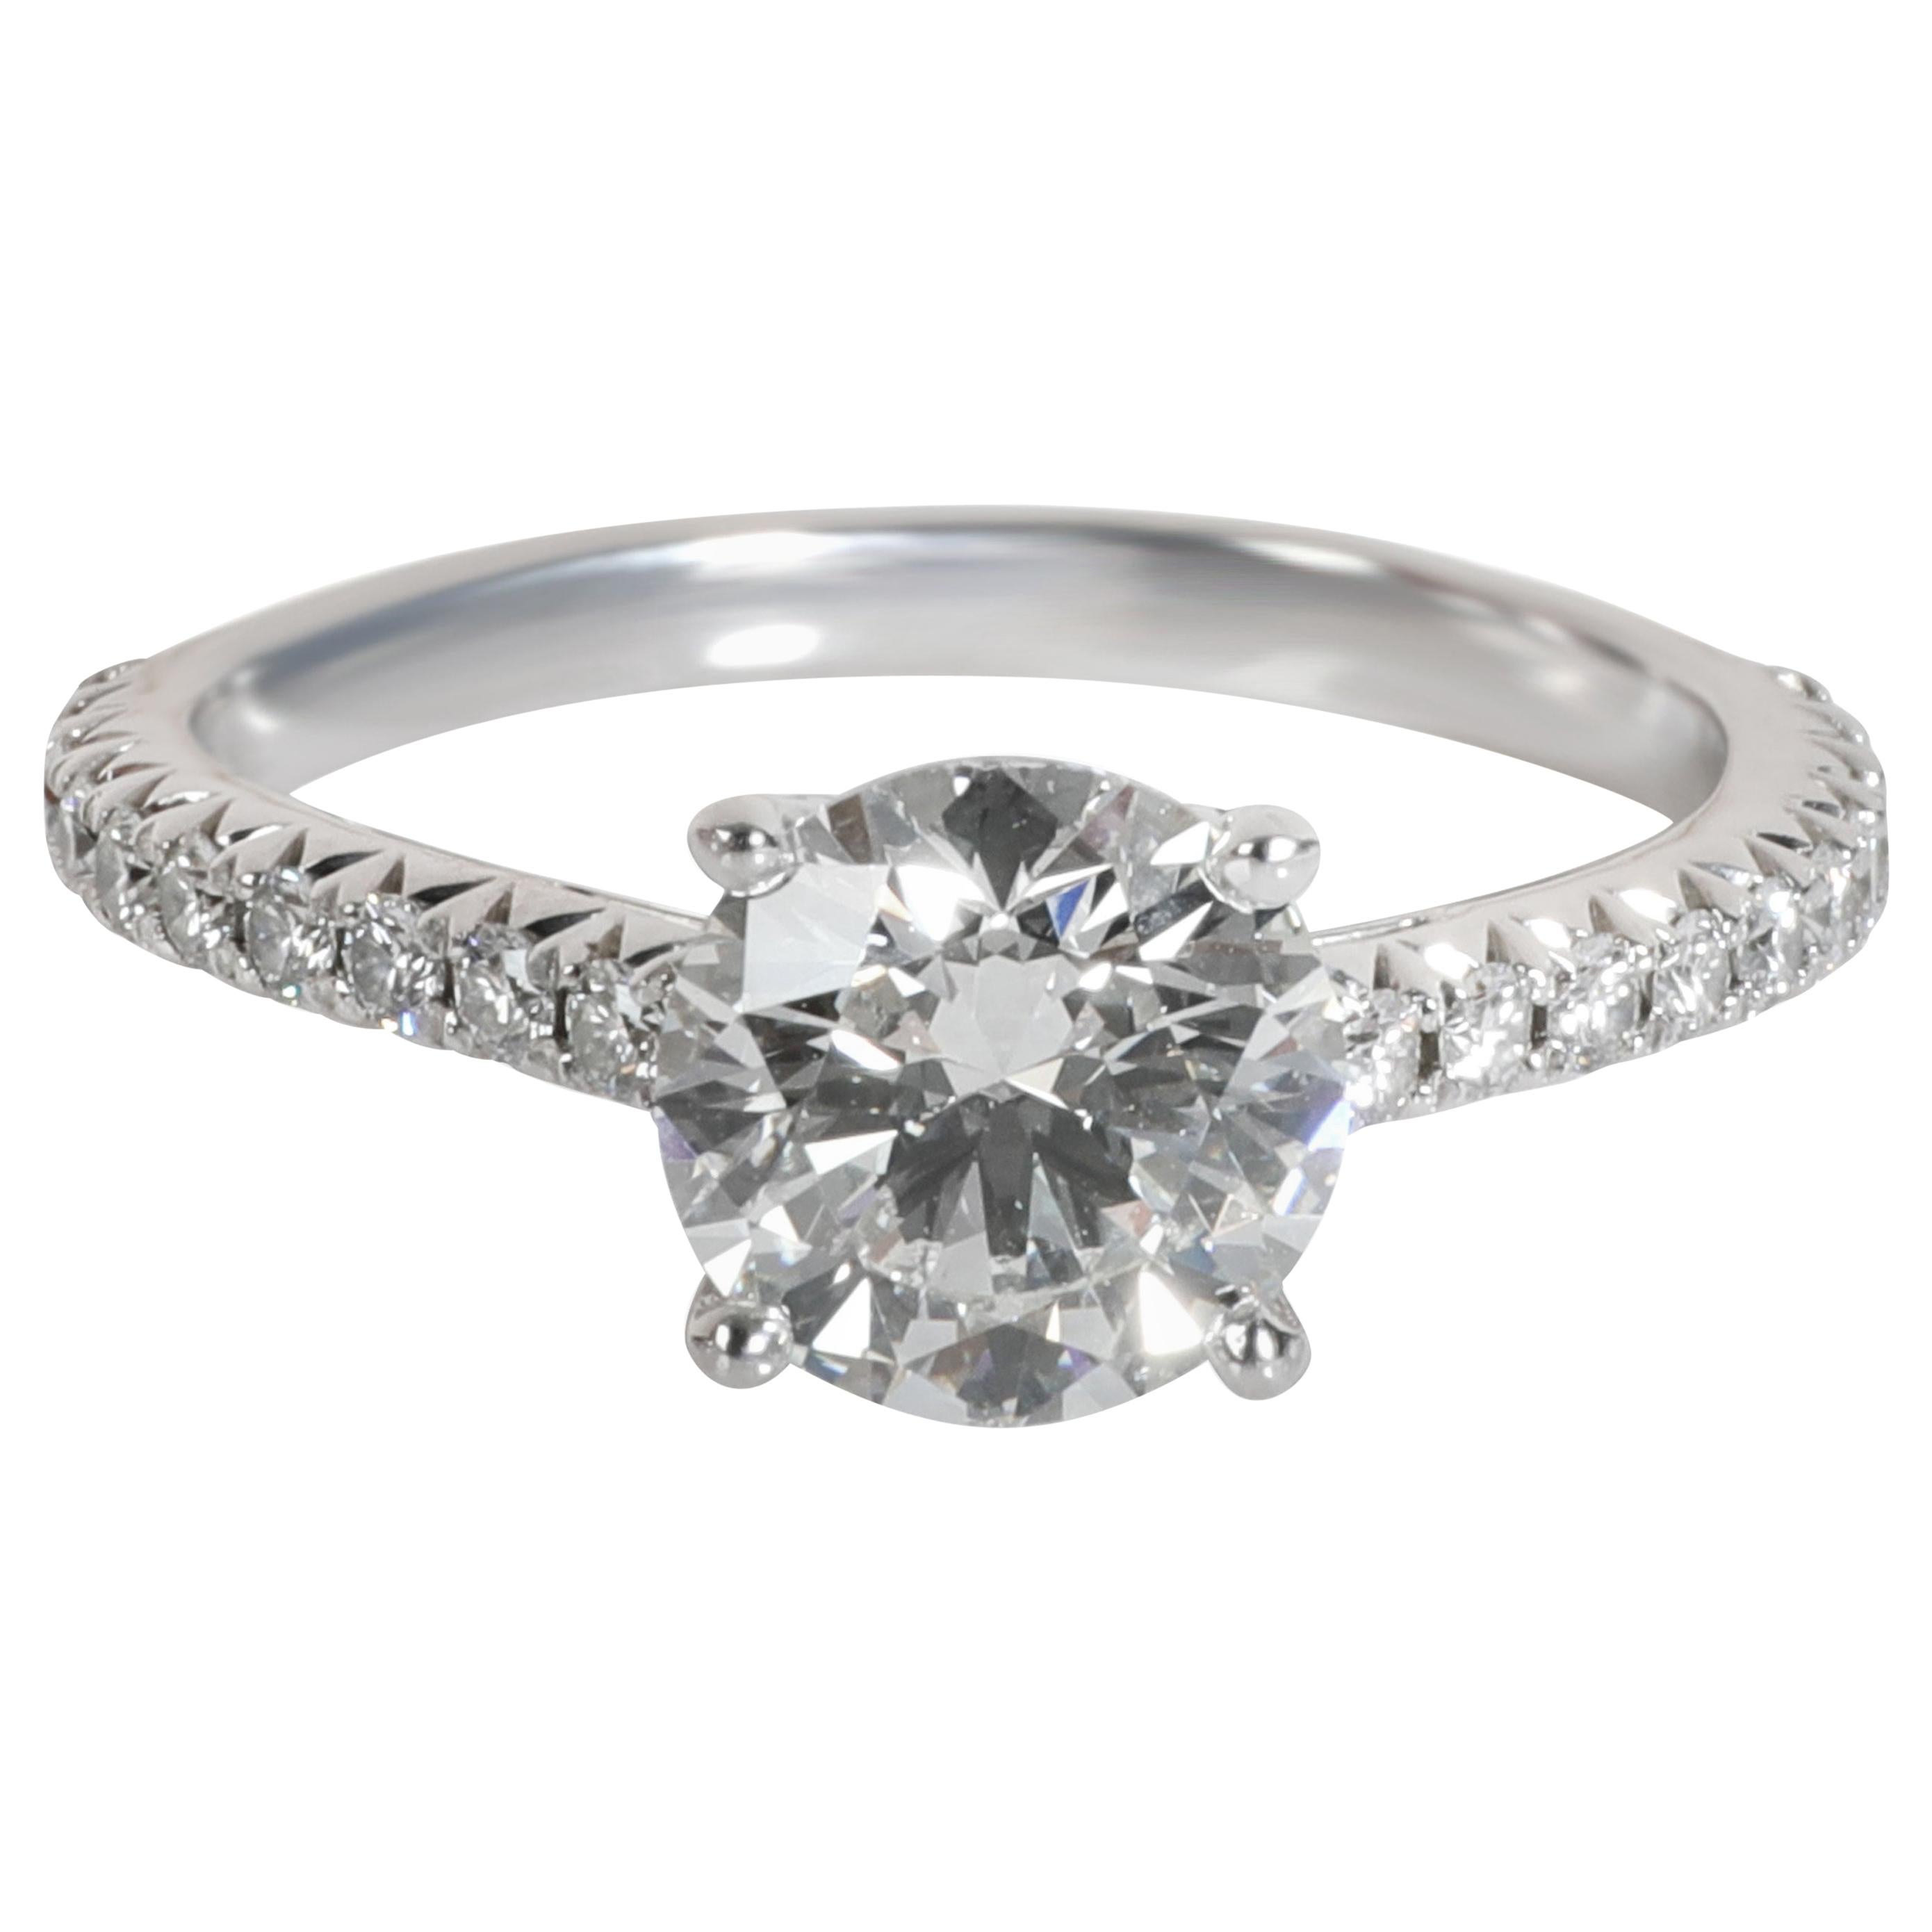 Tiffany & Co. Novo Diamond Diamond Engagement Ring in Platinum G VVS2 1.18 CTW